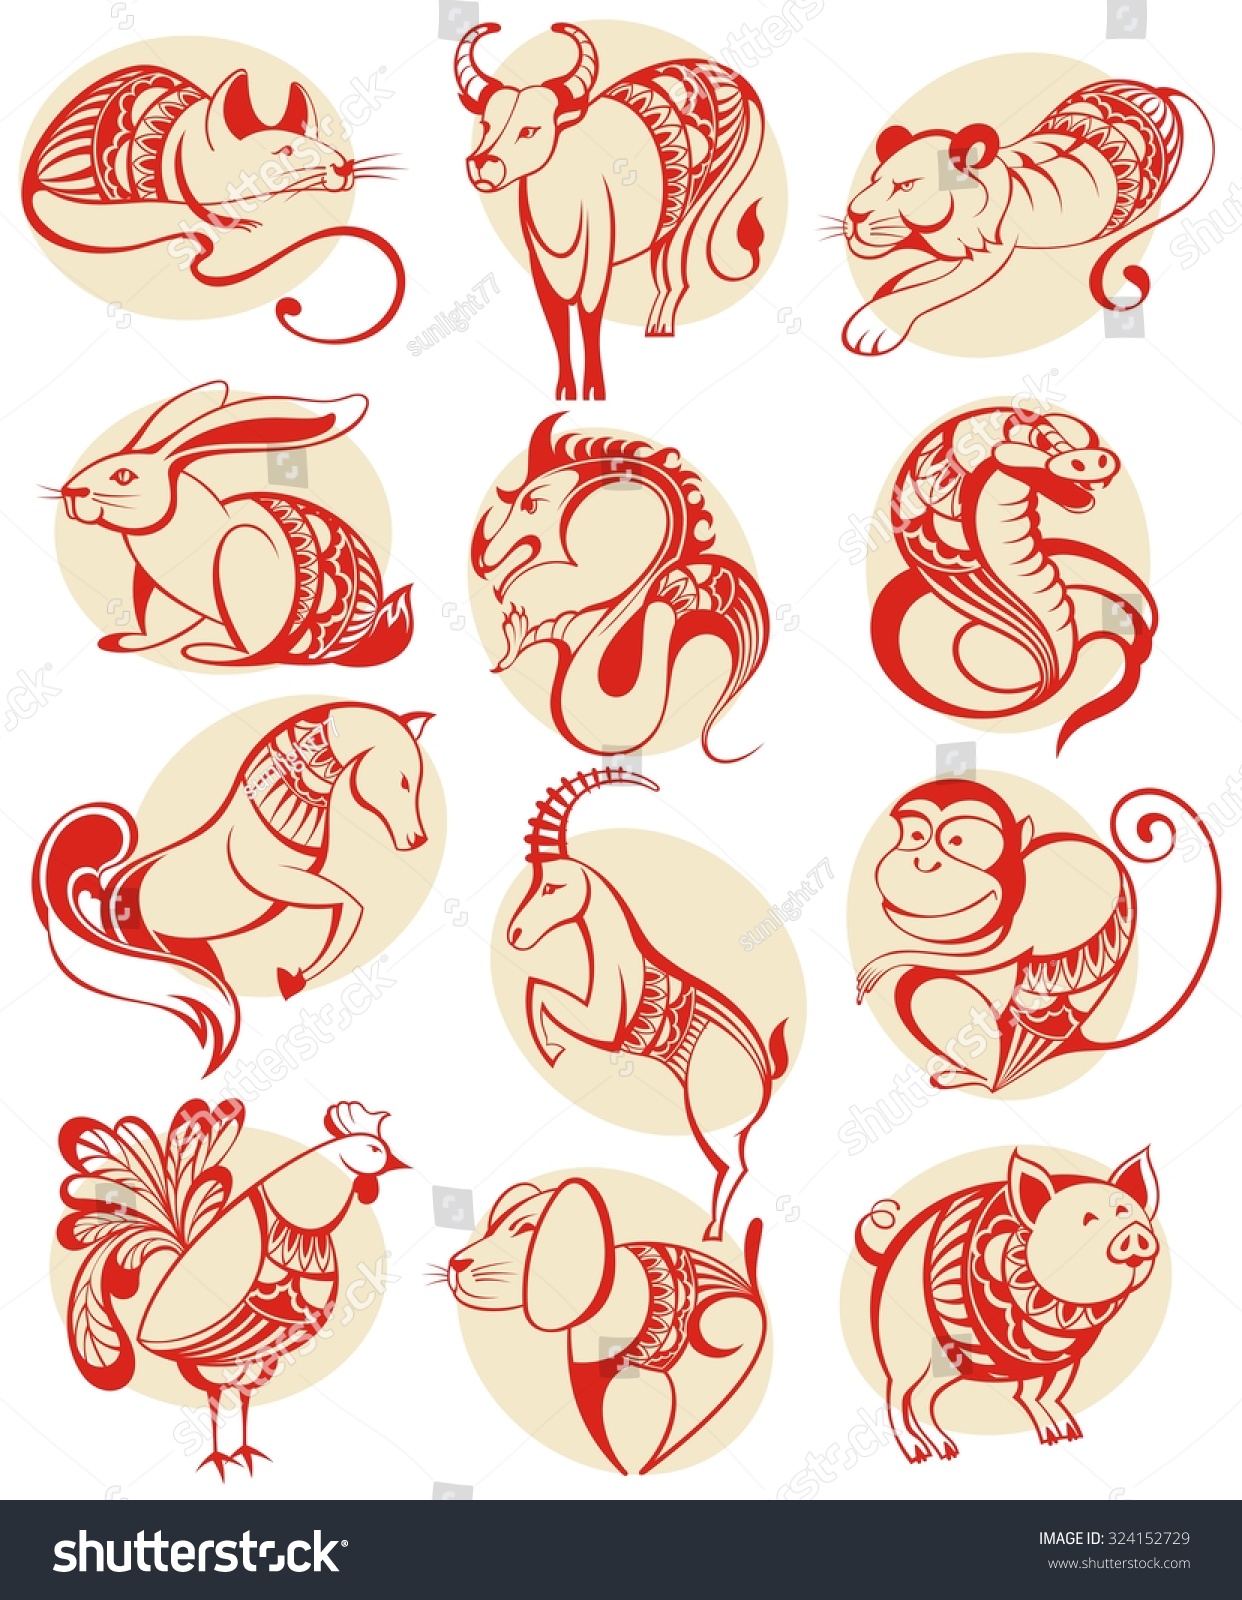 SVG of Chinese papercut Zodiac icons. svg